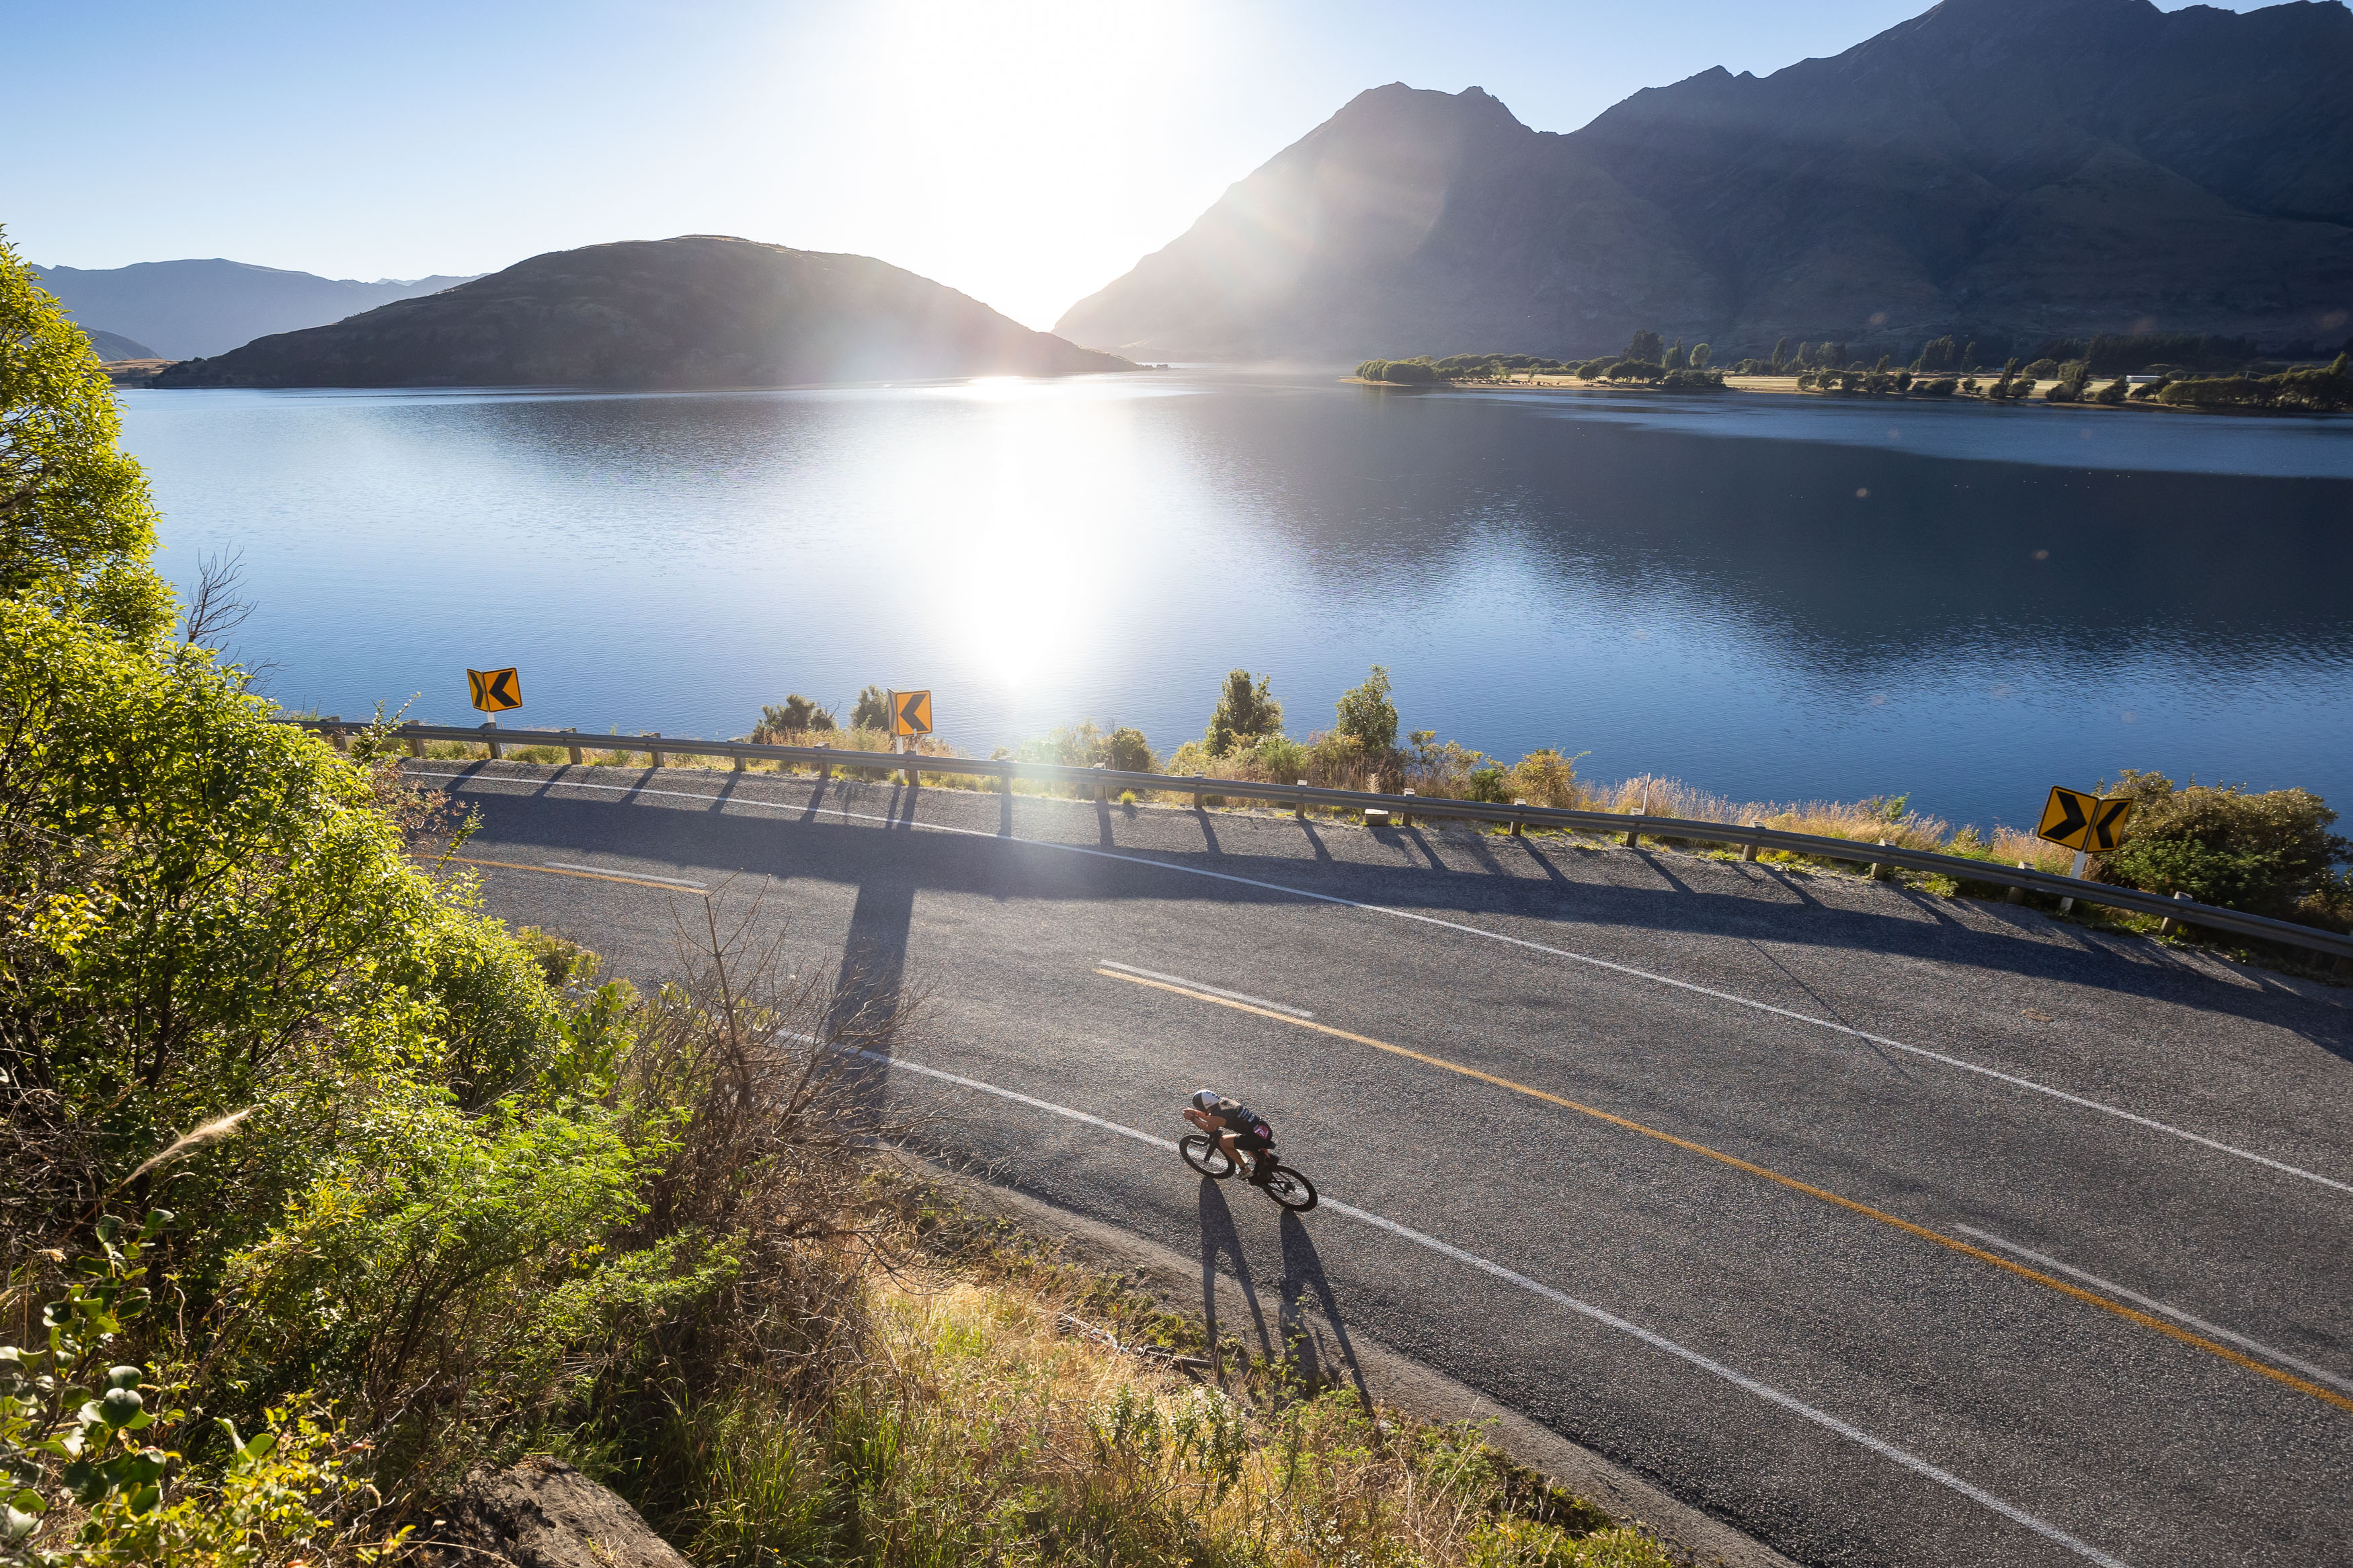 Triathlon cyclist riding on road beside lake